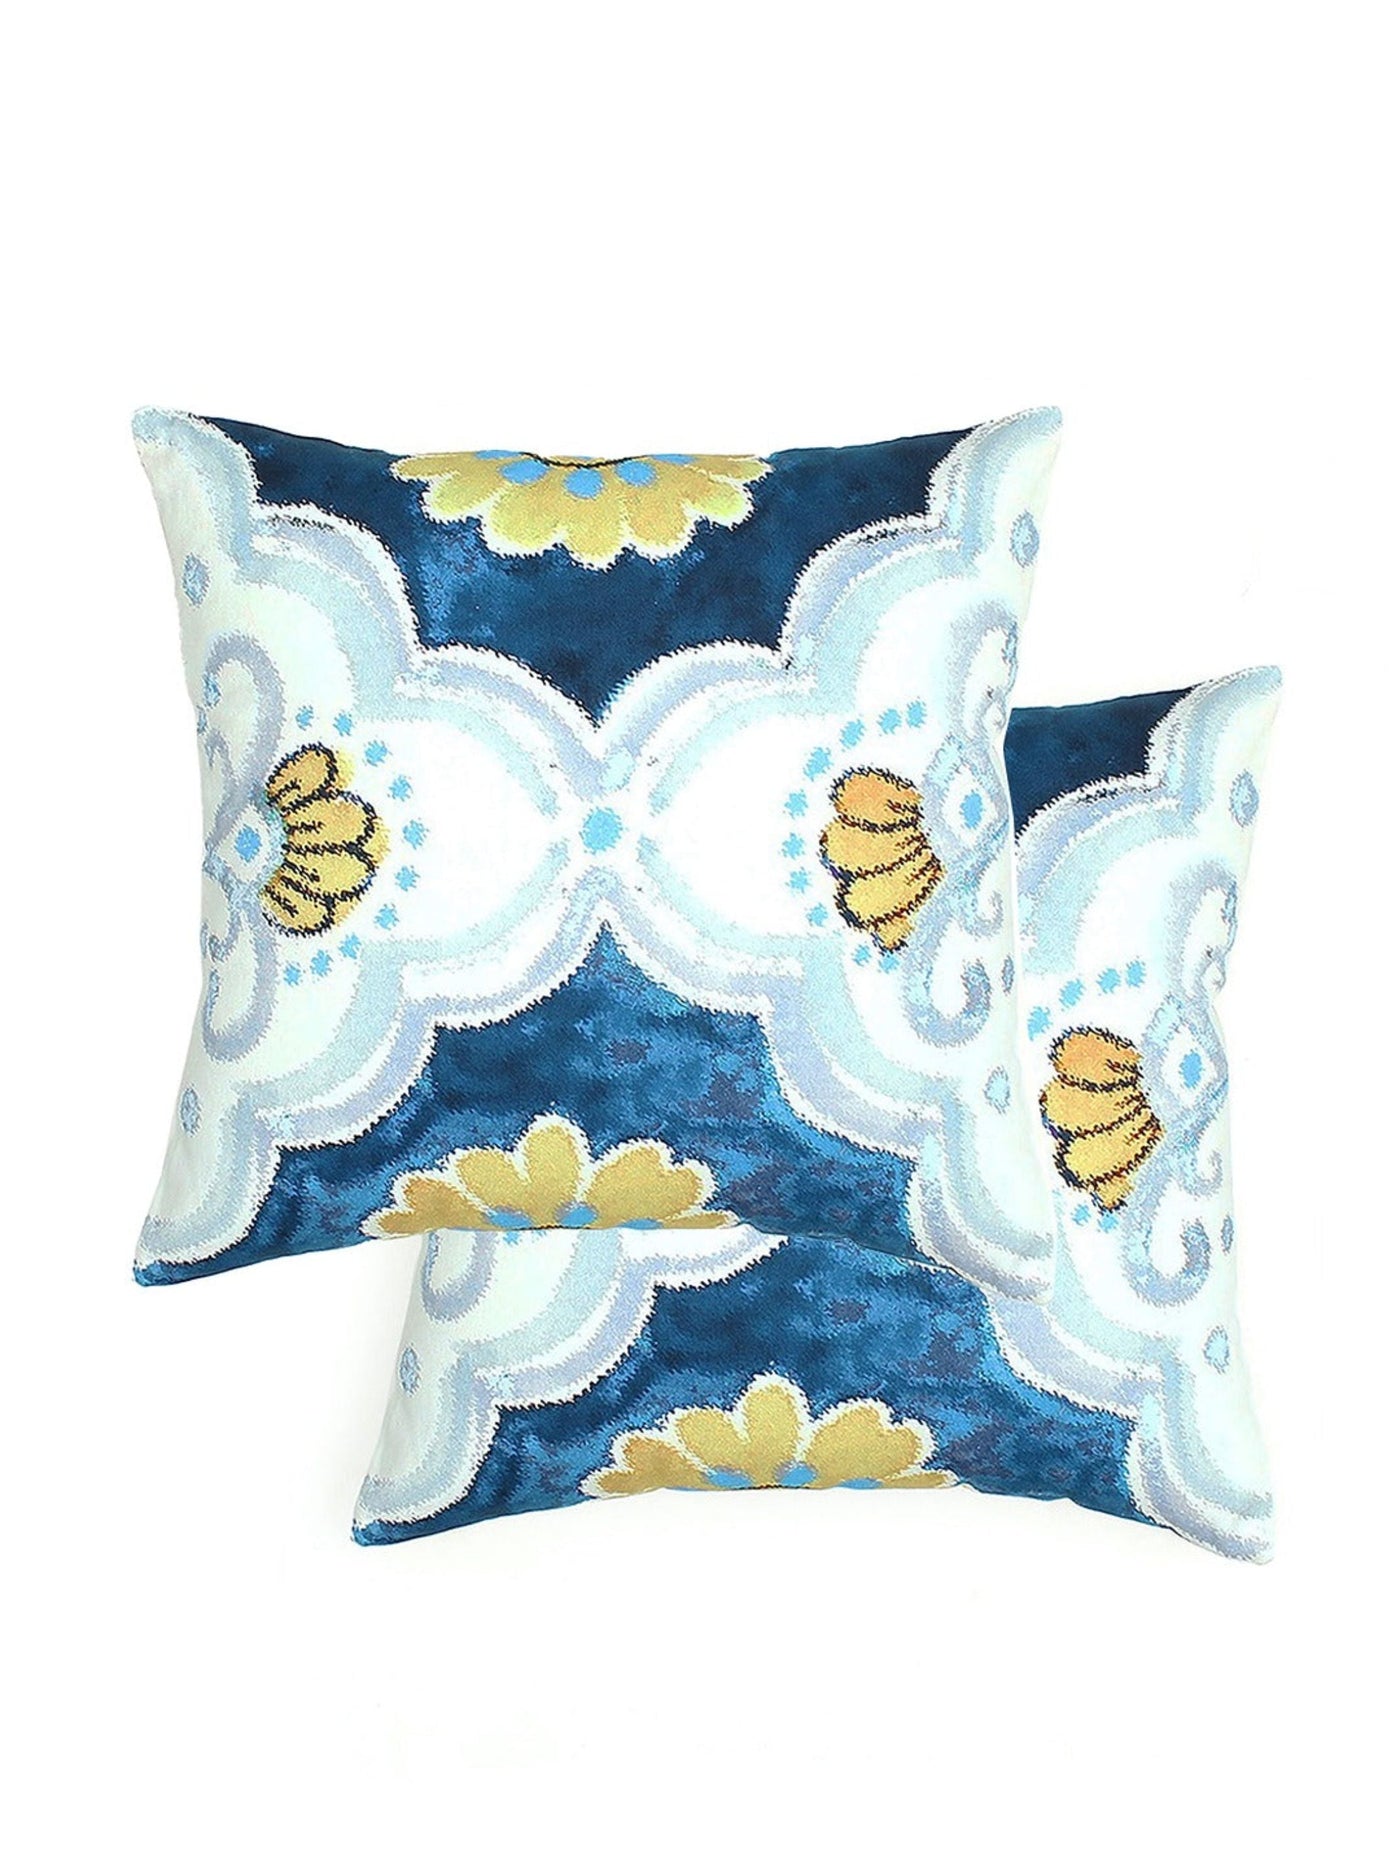 Cushion Cover - Neuschwanstein Tile Cotton 2 s- Blue-8903773001187